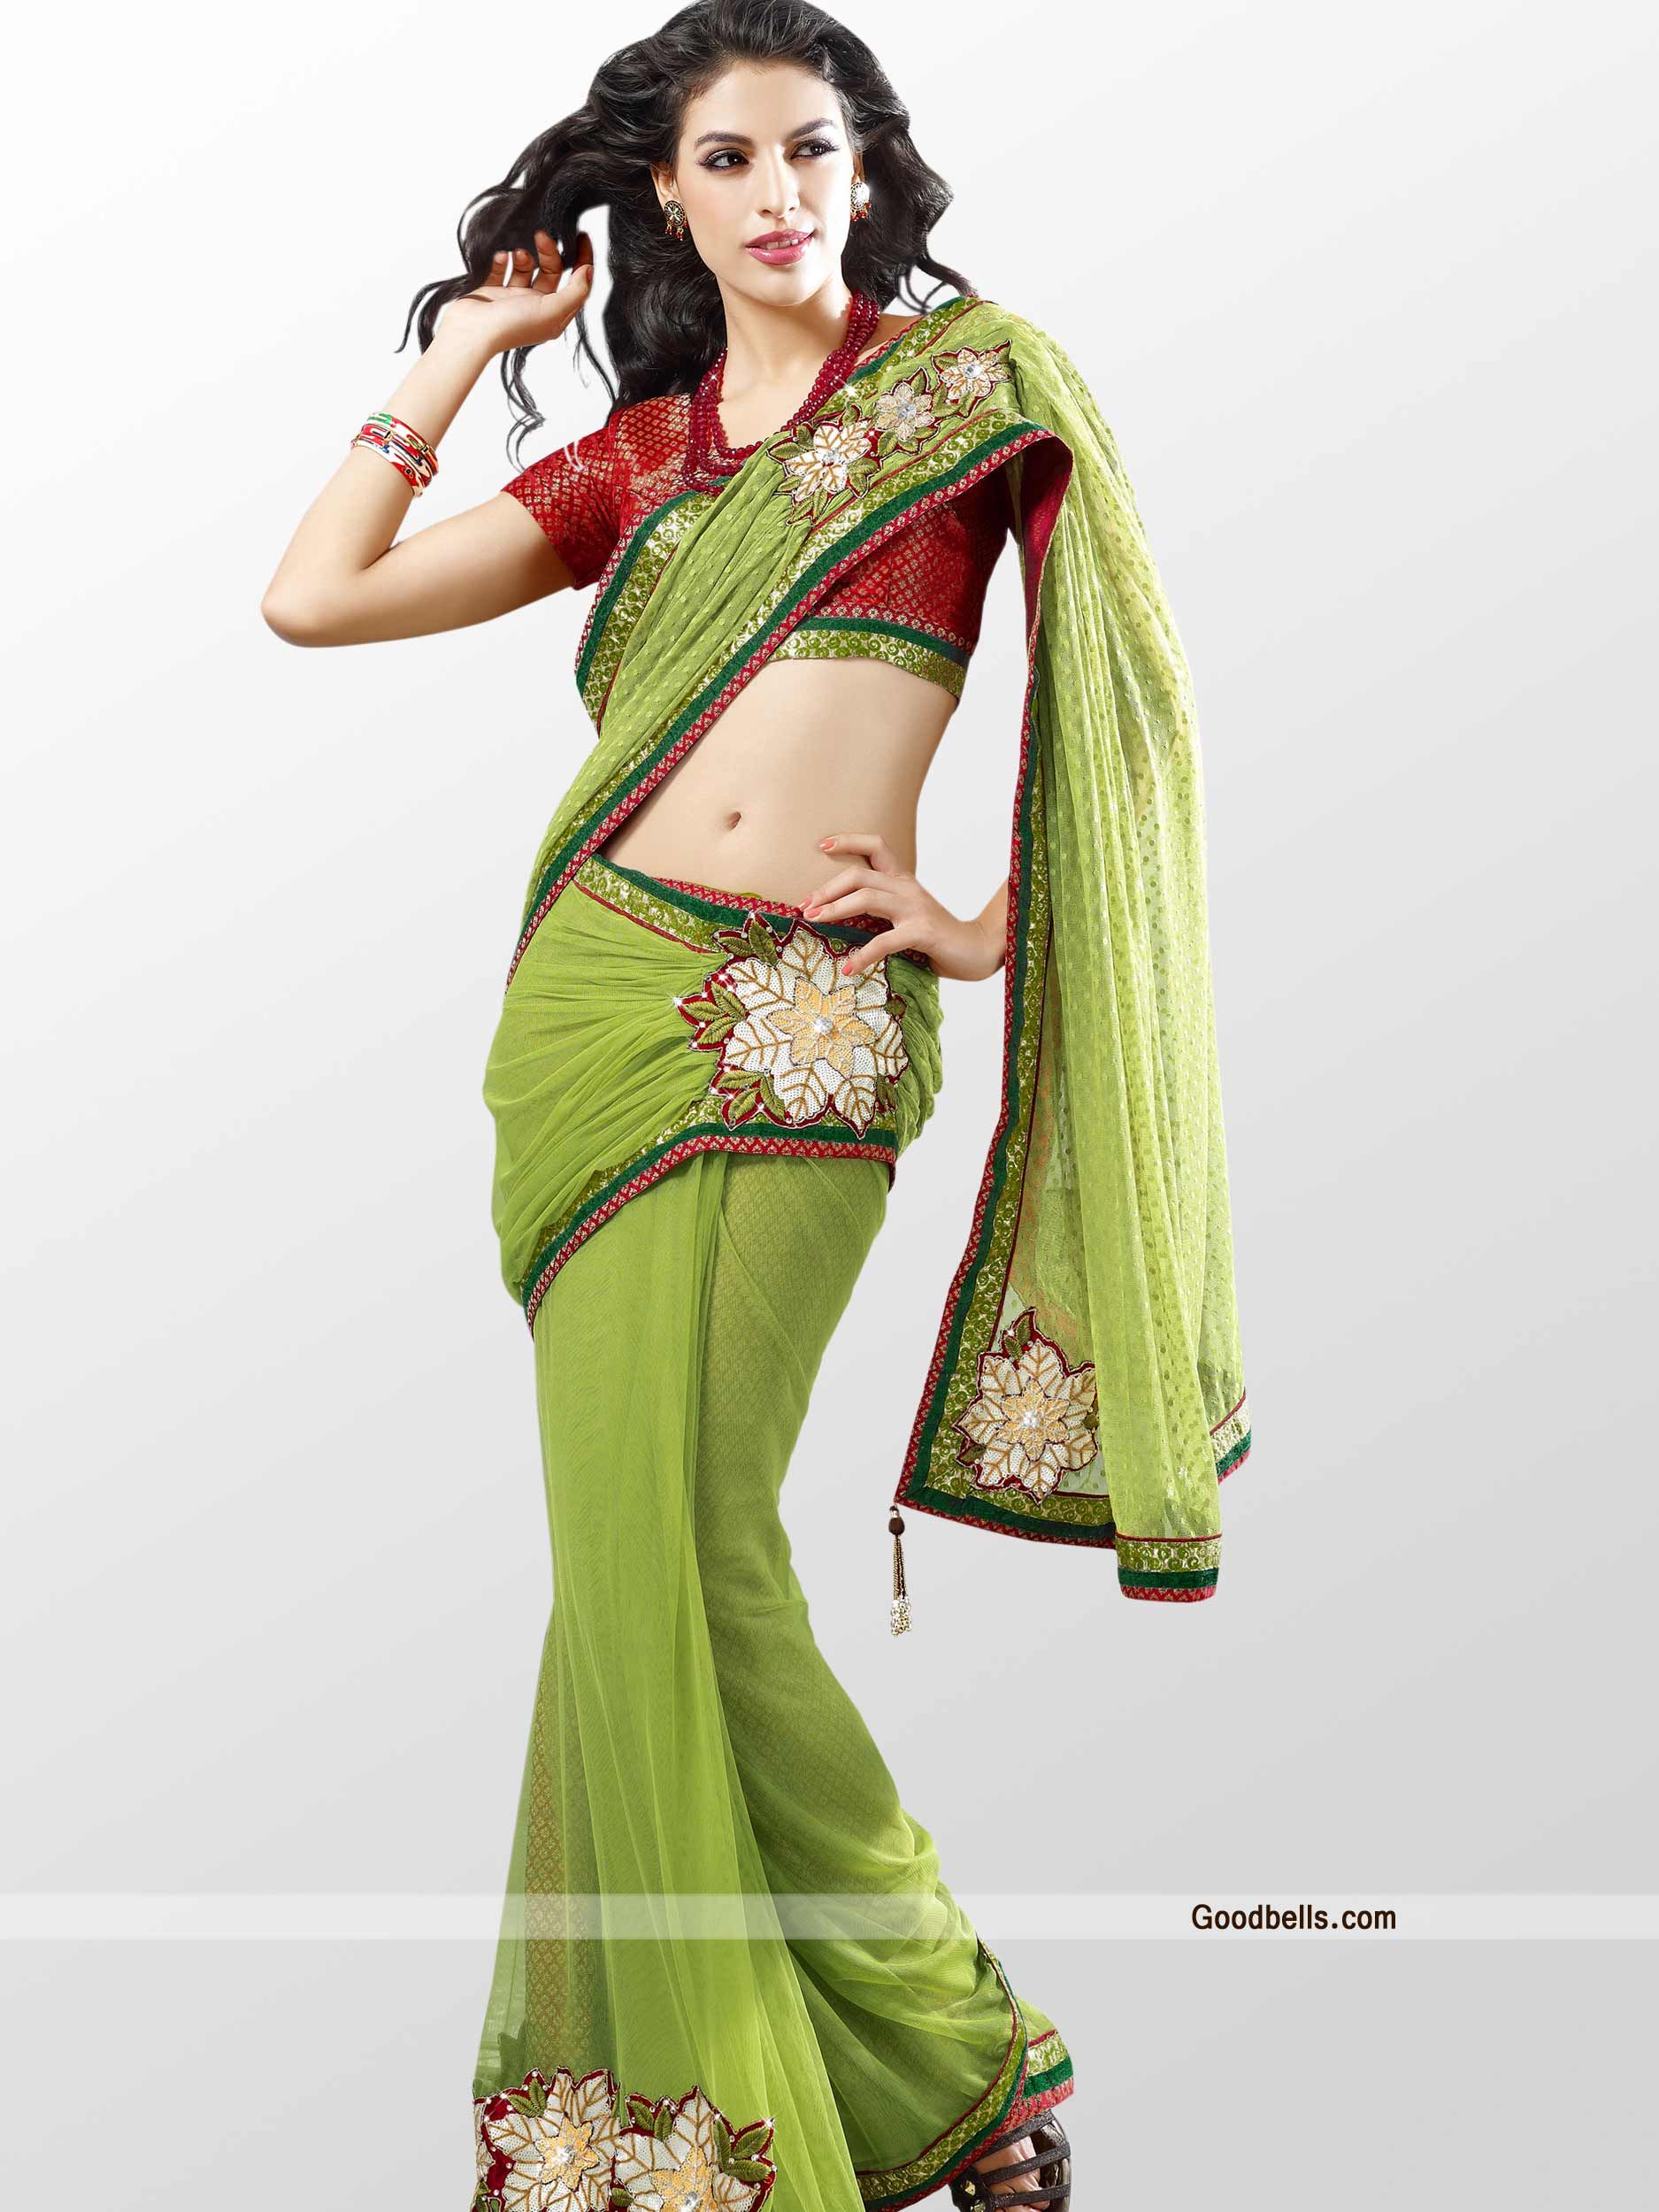 Ethnic Bridal Bollywood Indian Green Saree 